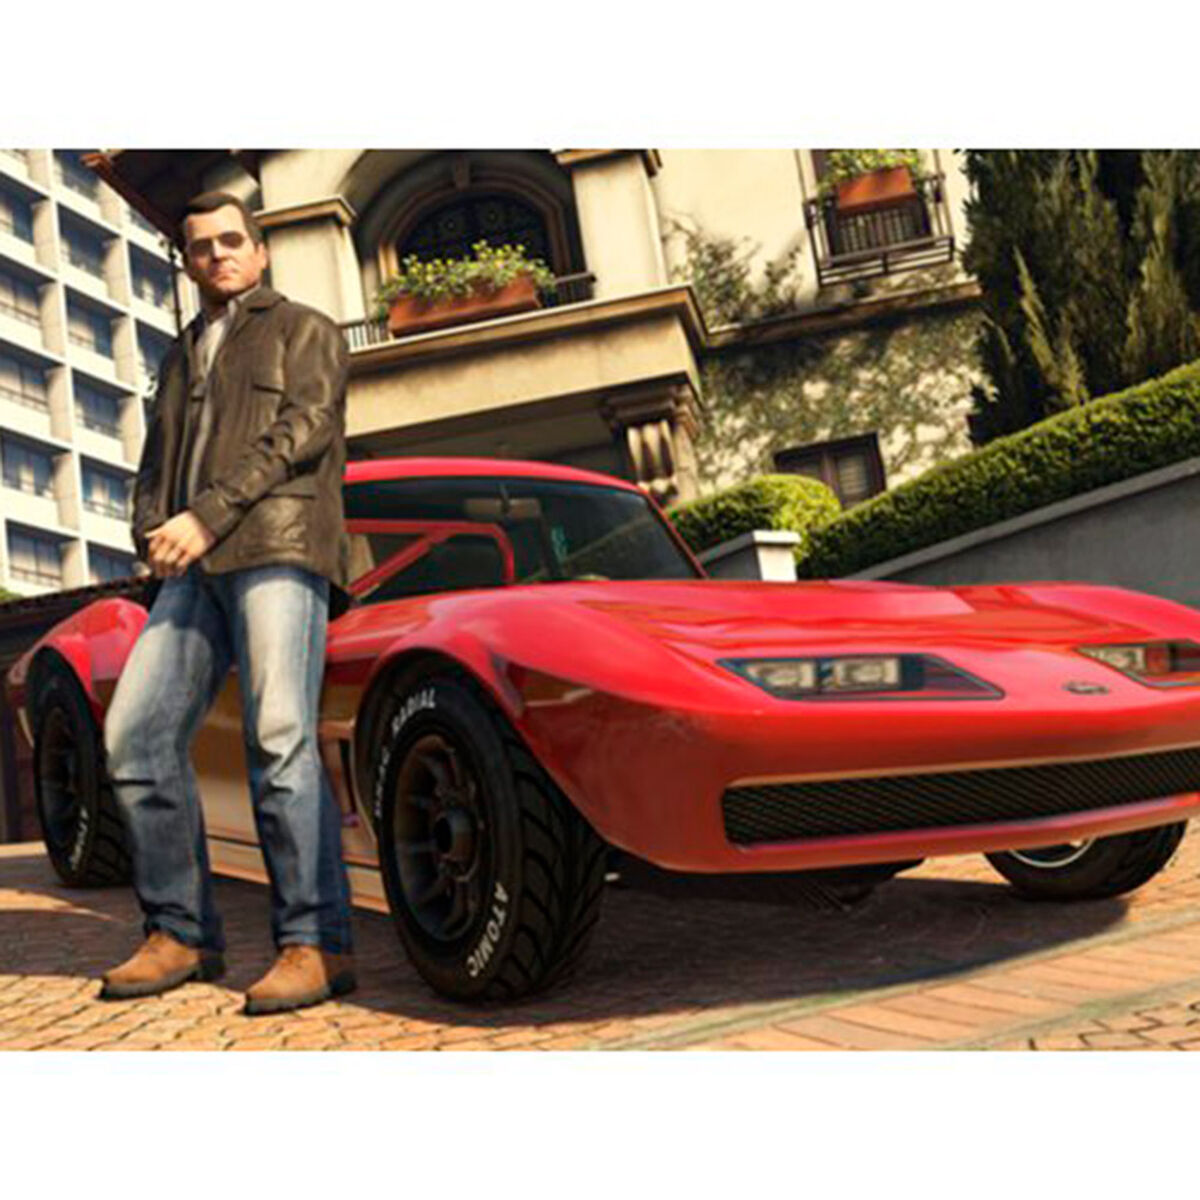 Juego PS4 Grand Theft Auto V (Europeo)